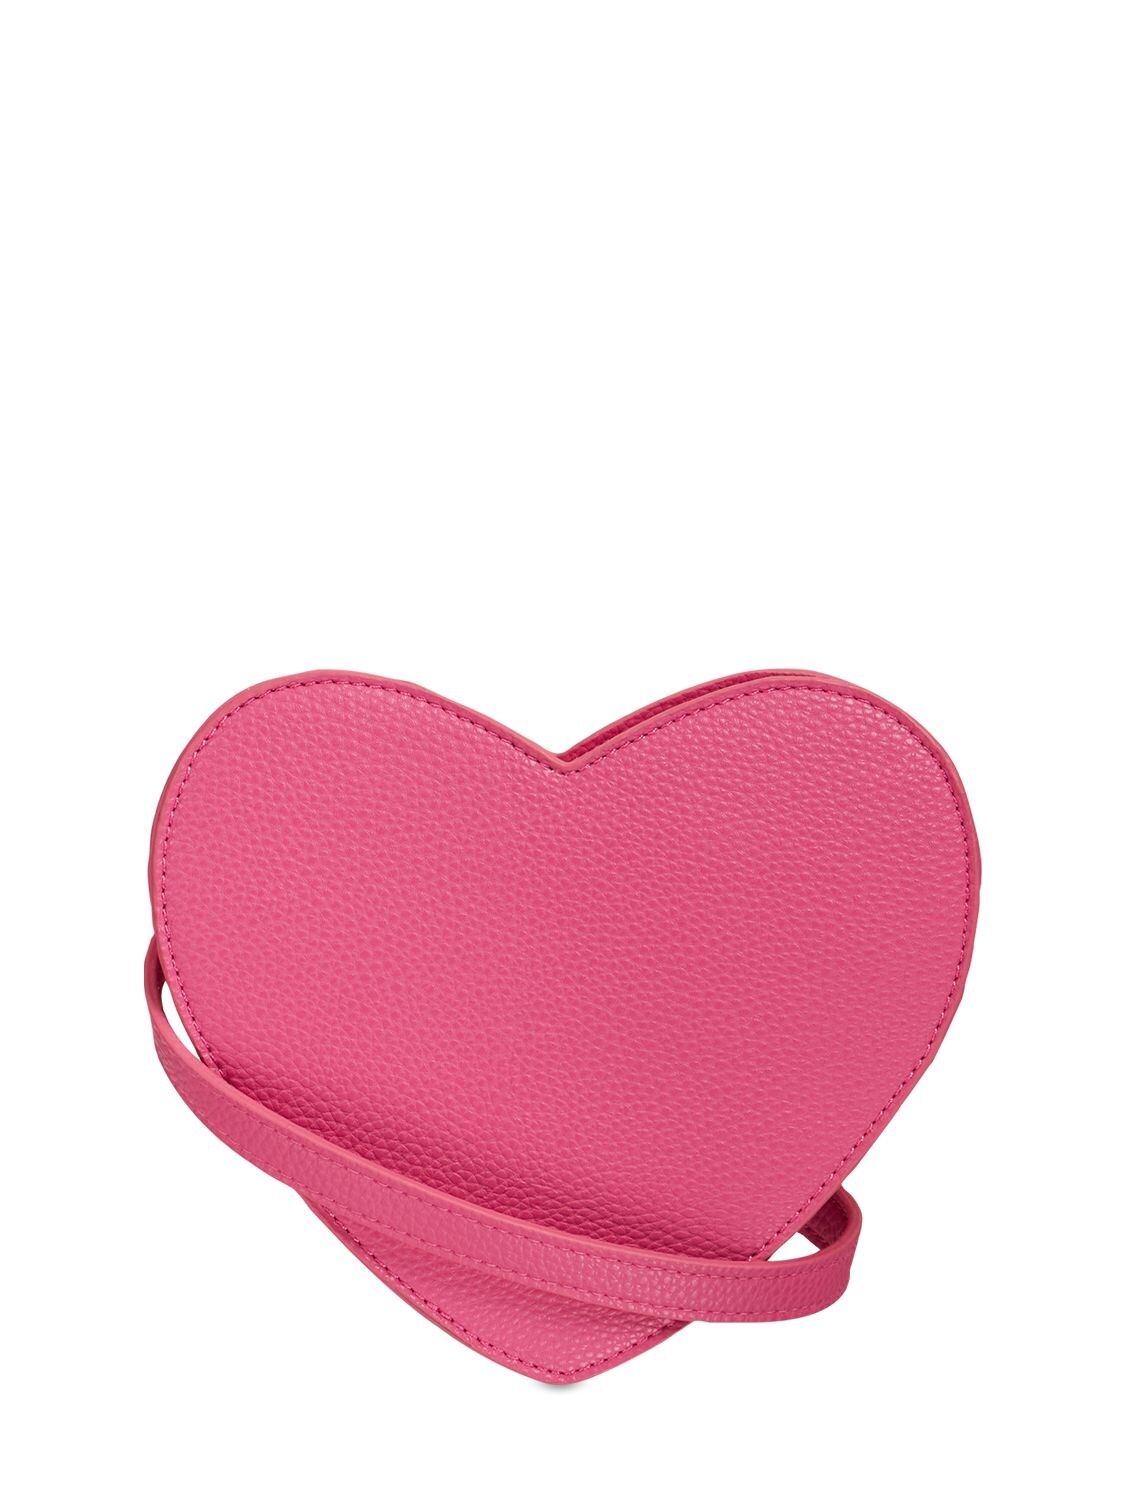 Molo Kids' Girl's Heart-shaped Crossbody Bag In Dark Pink